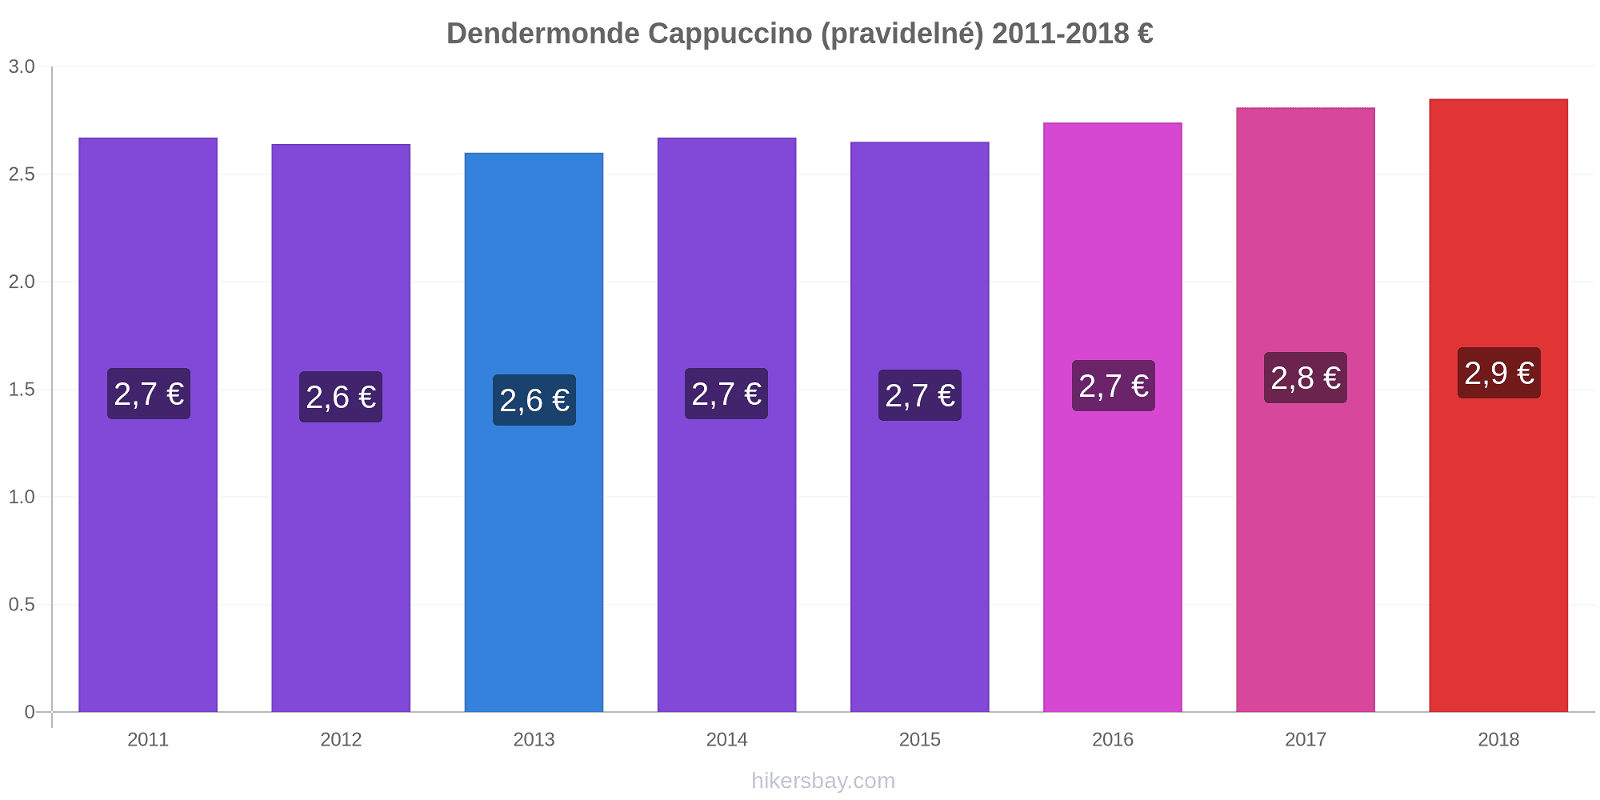 Dendermonde změny cen Cappuccino (pravidelné) hikersbay.com